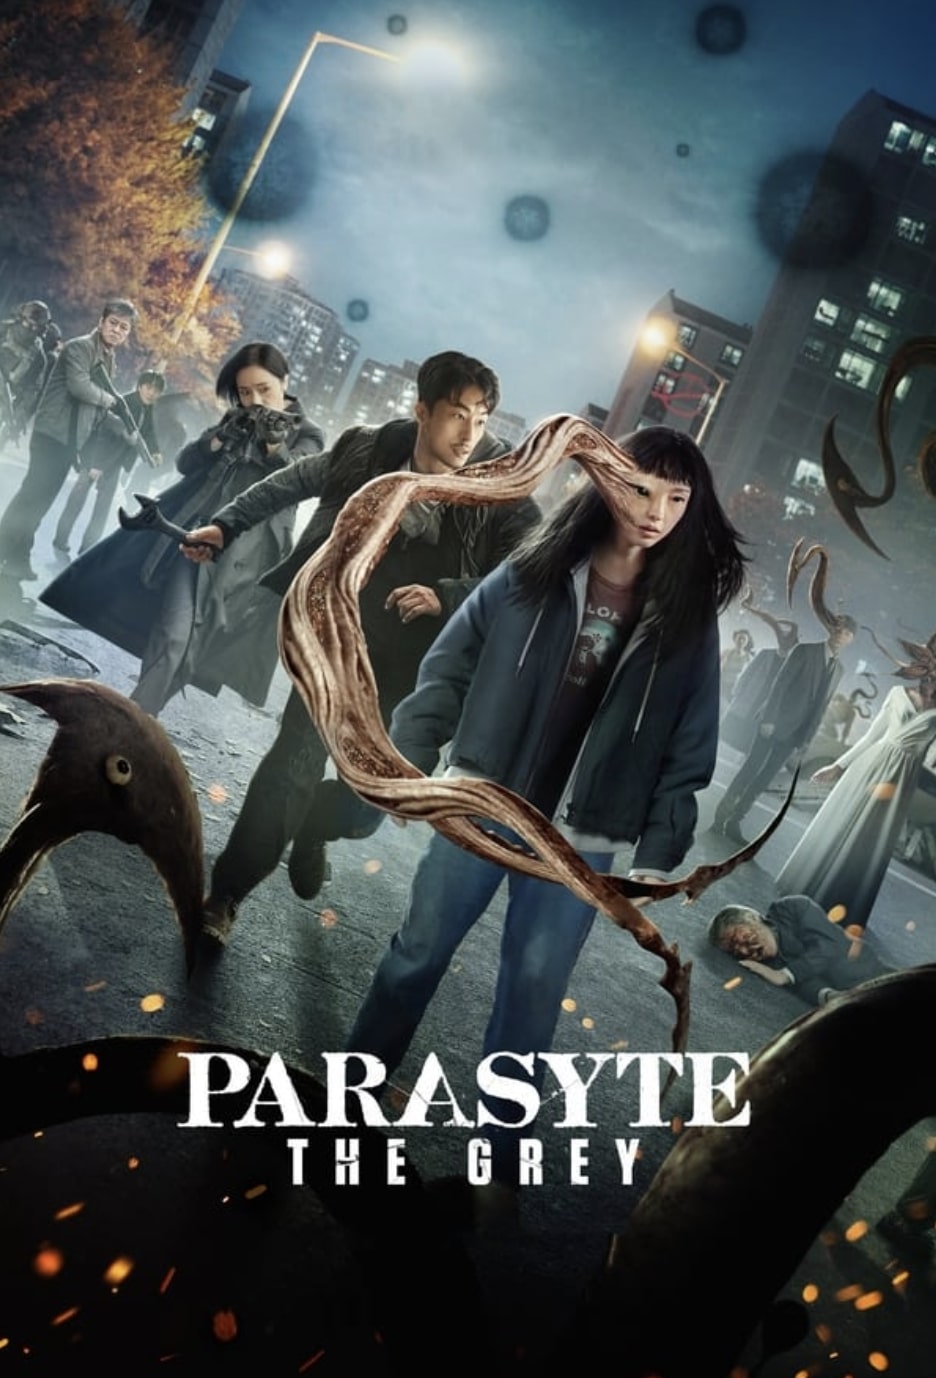 Parasyte-The Grey ดูซีรี่ย์เกาหลี Netflix พากย์ไทย